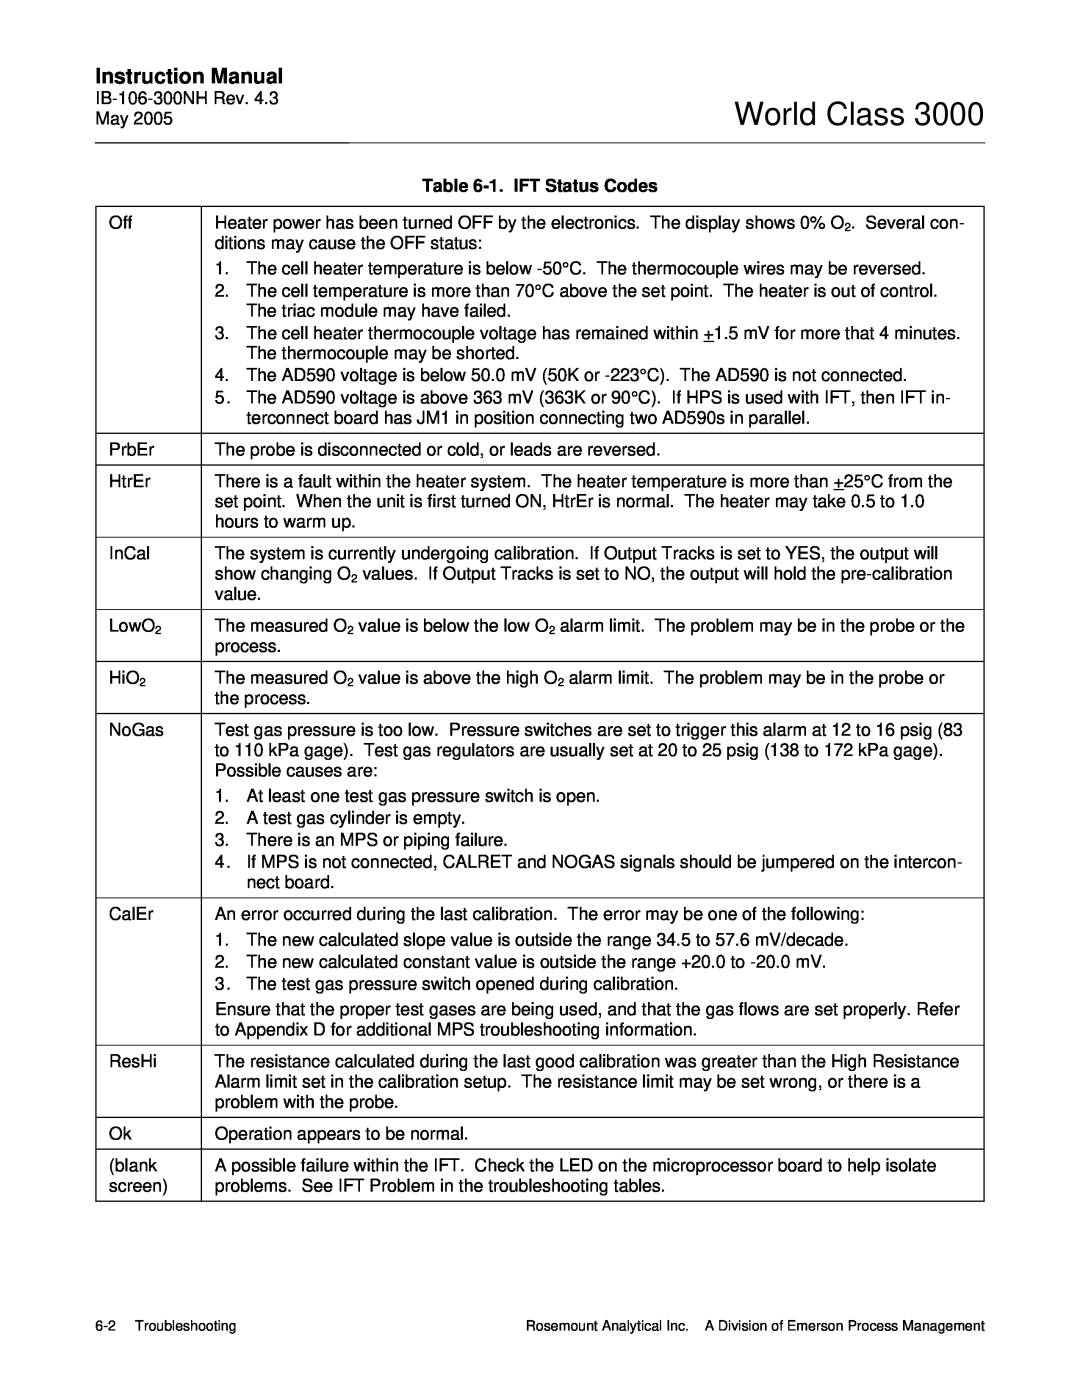 Emerson 3000 instruction manual World Class, Instruction Manual, 1.IFT Status Codes 